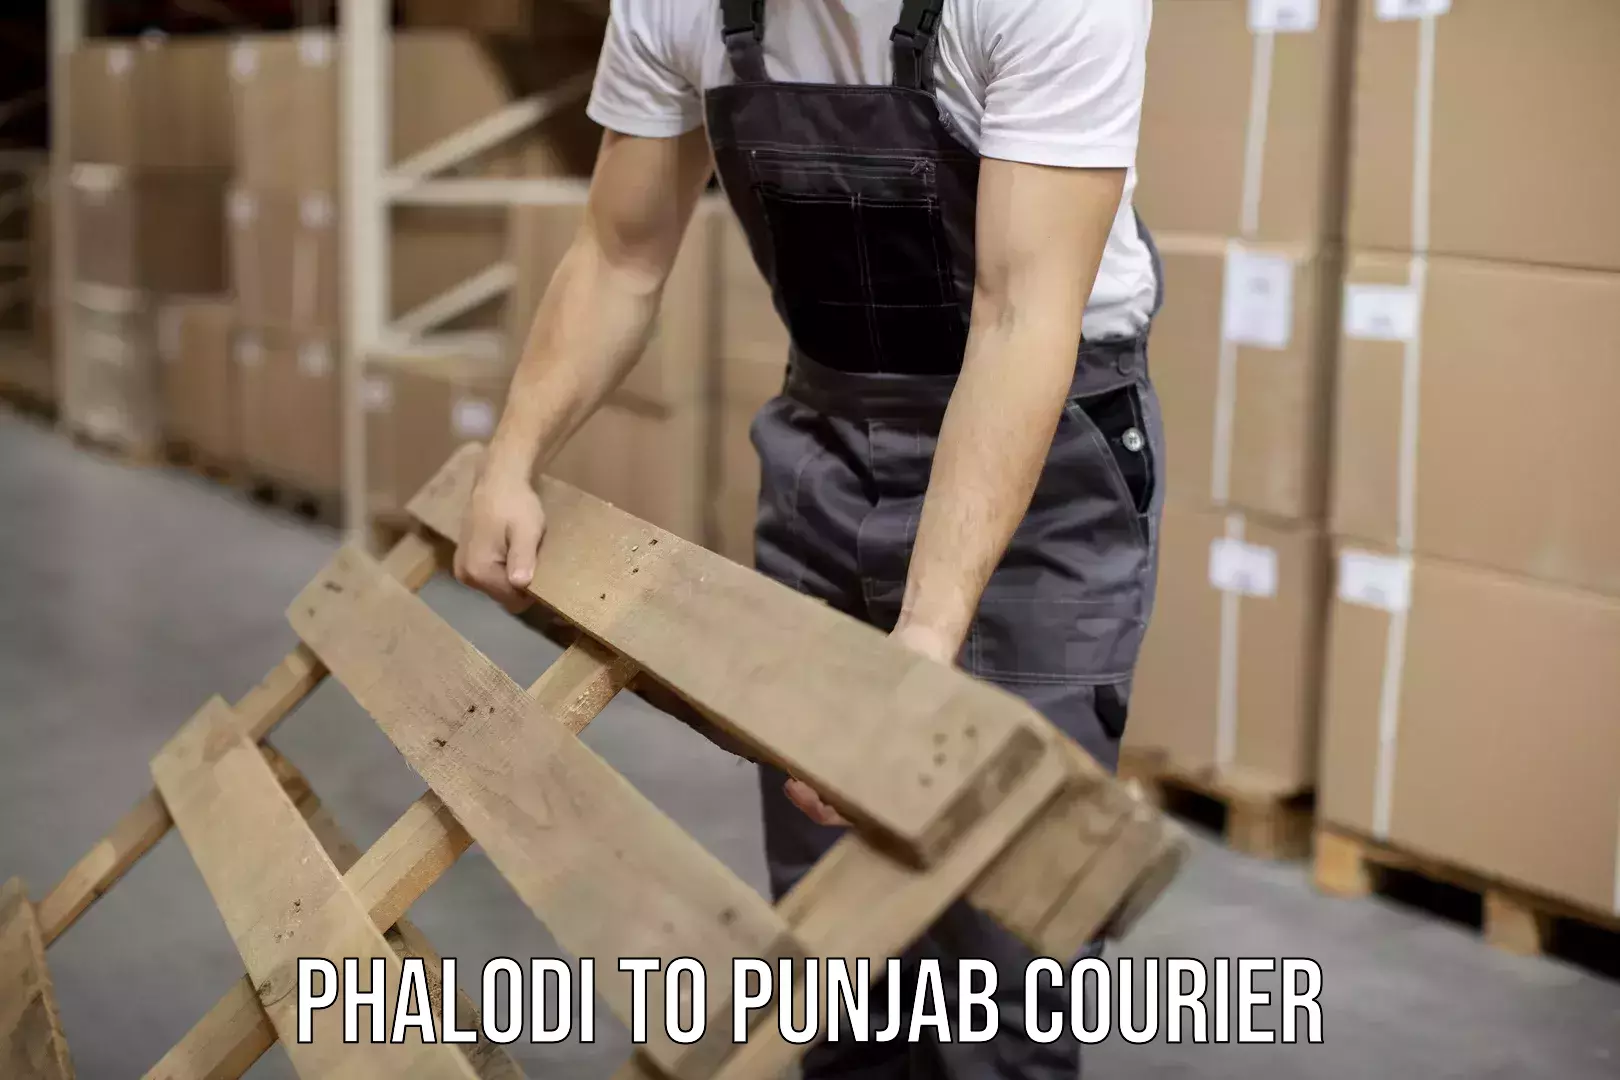 Courier service partnerships Phalodi to Abohar